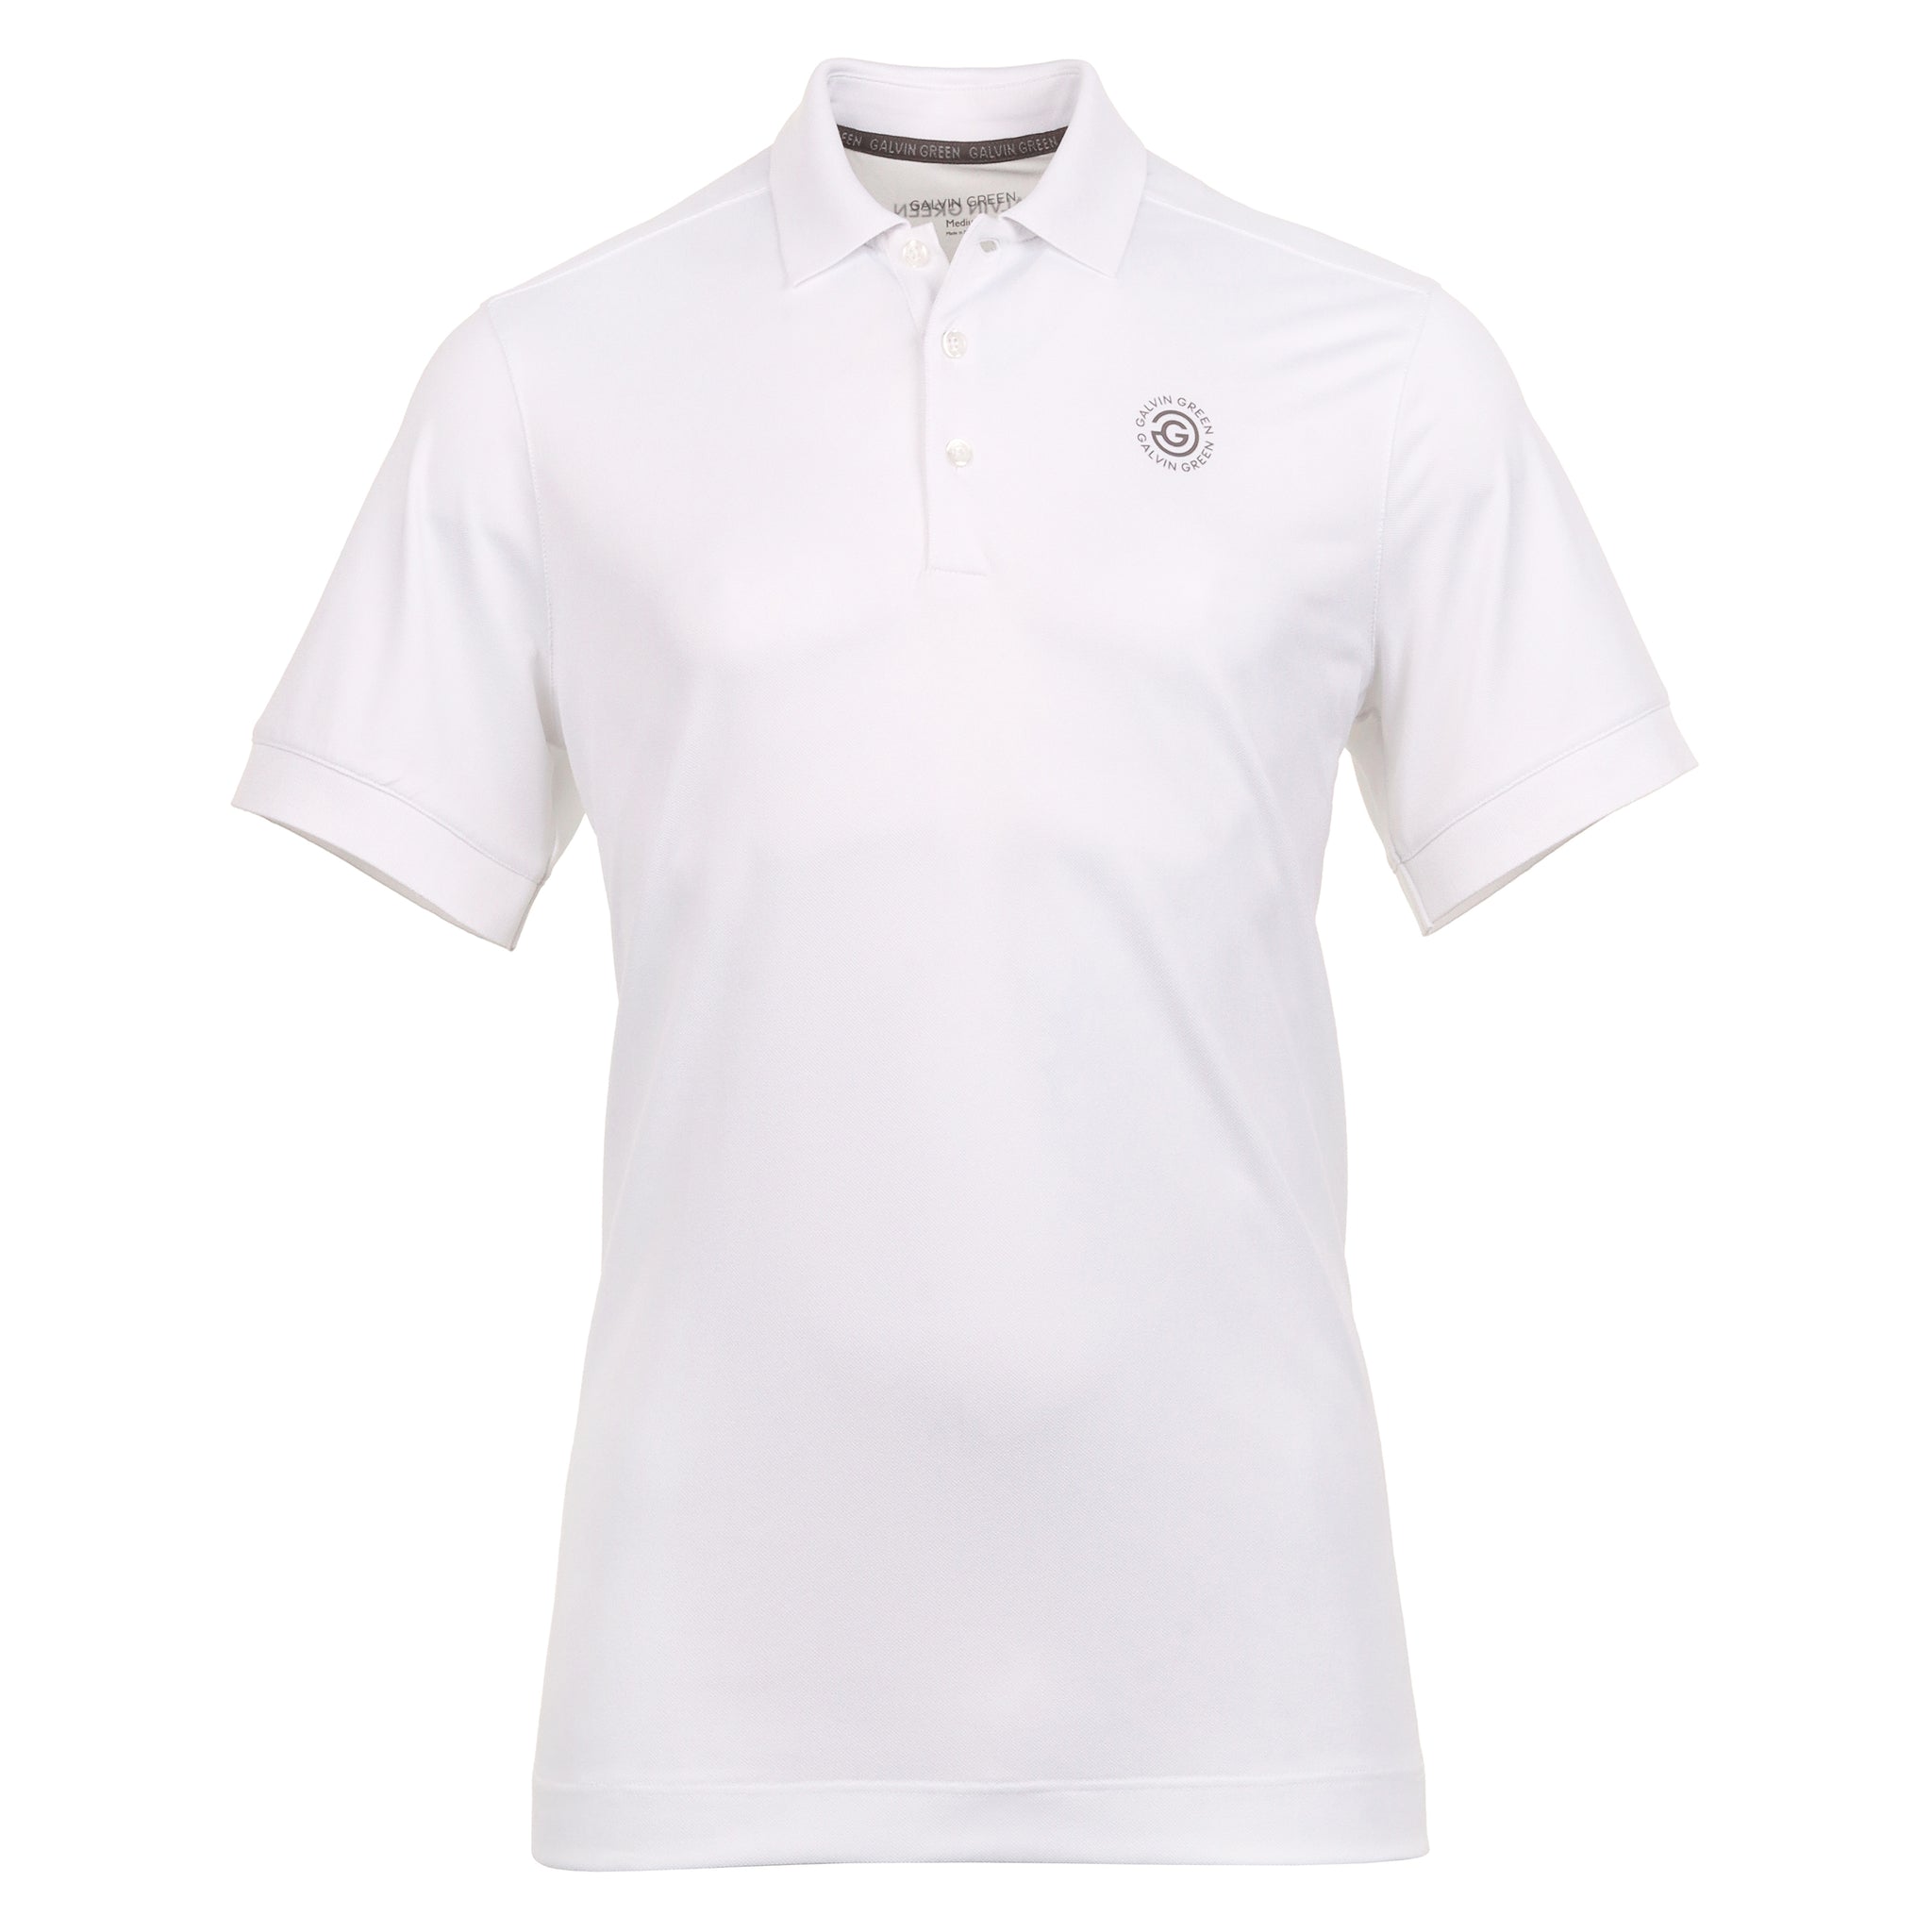 galvin-green-maximilian-ventil8-golf-shirt-white-9409